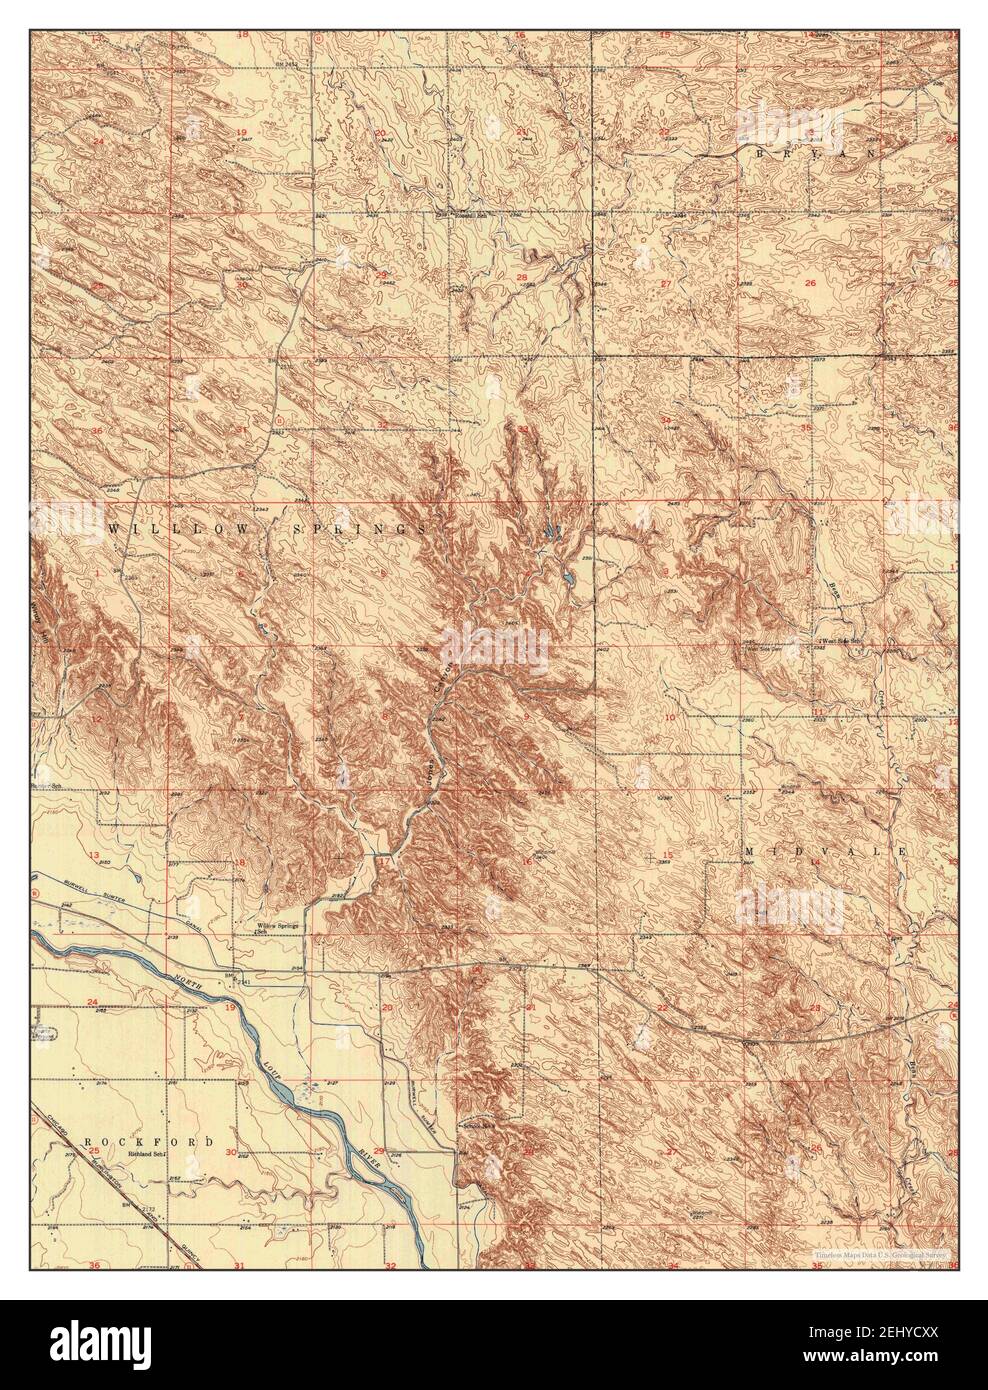 Burwell SE, Nebraska, map 1952, 1:24000, United States of America by Timeless Maps, data U.S. Geological Survey Stock Photo